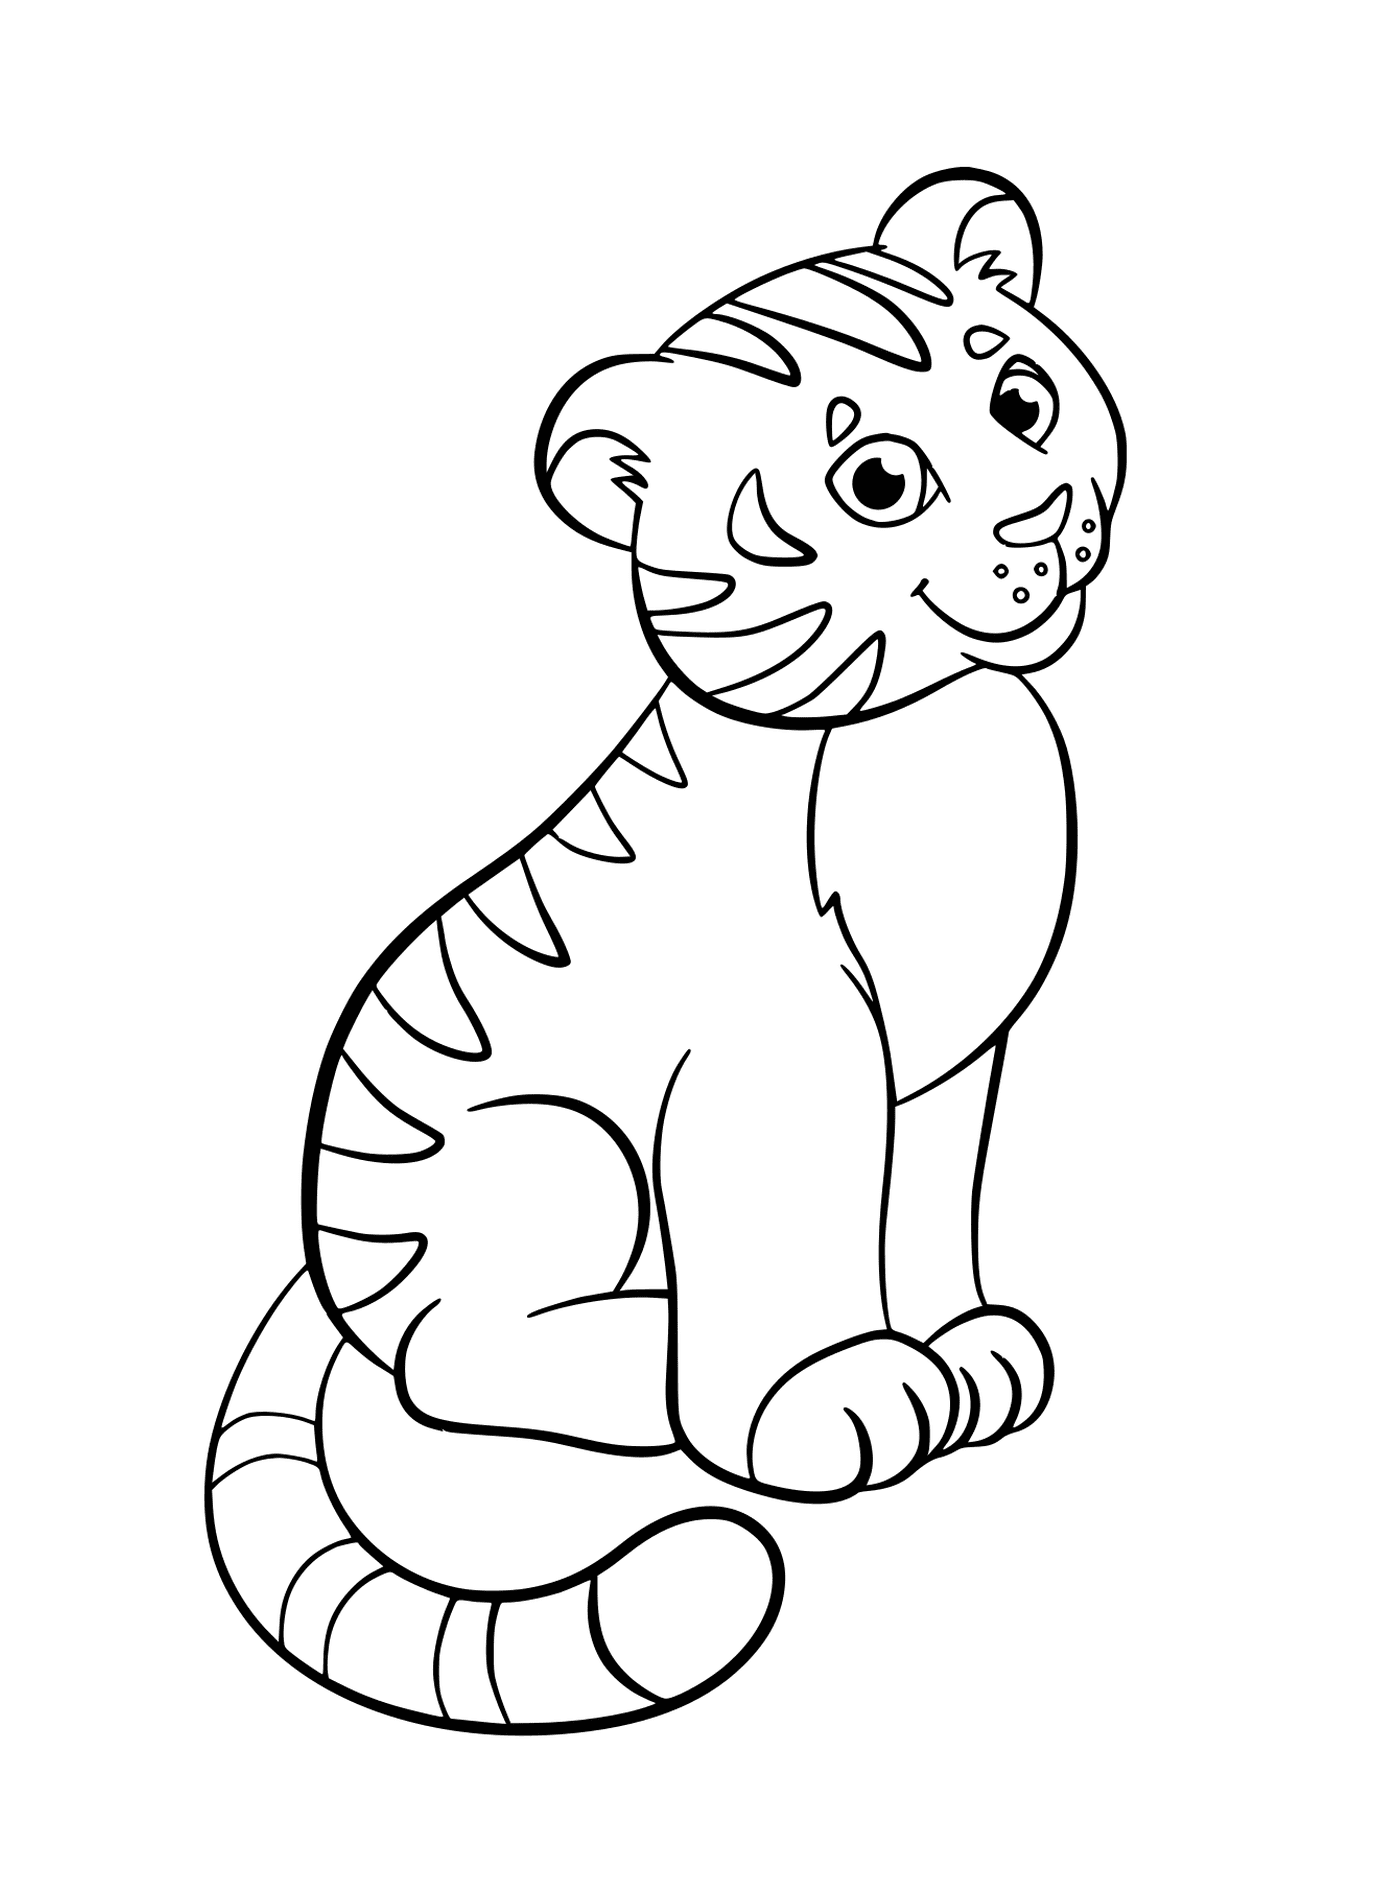  Сидящий и улыбающийся тигр 